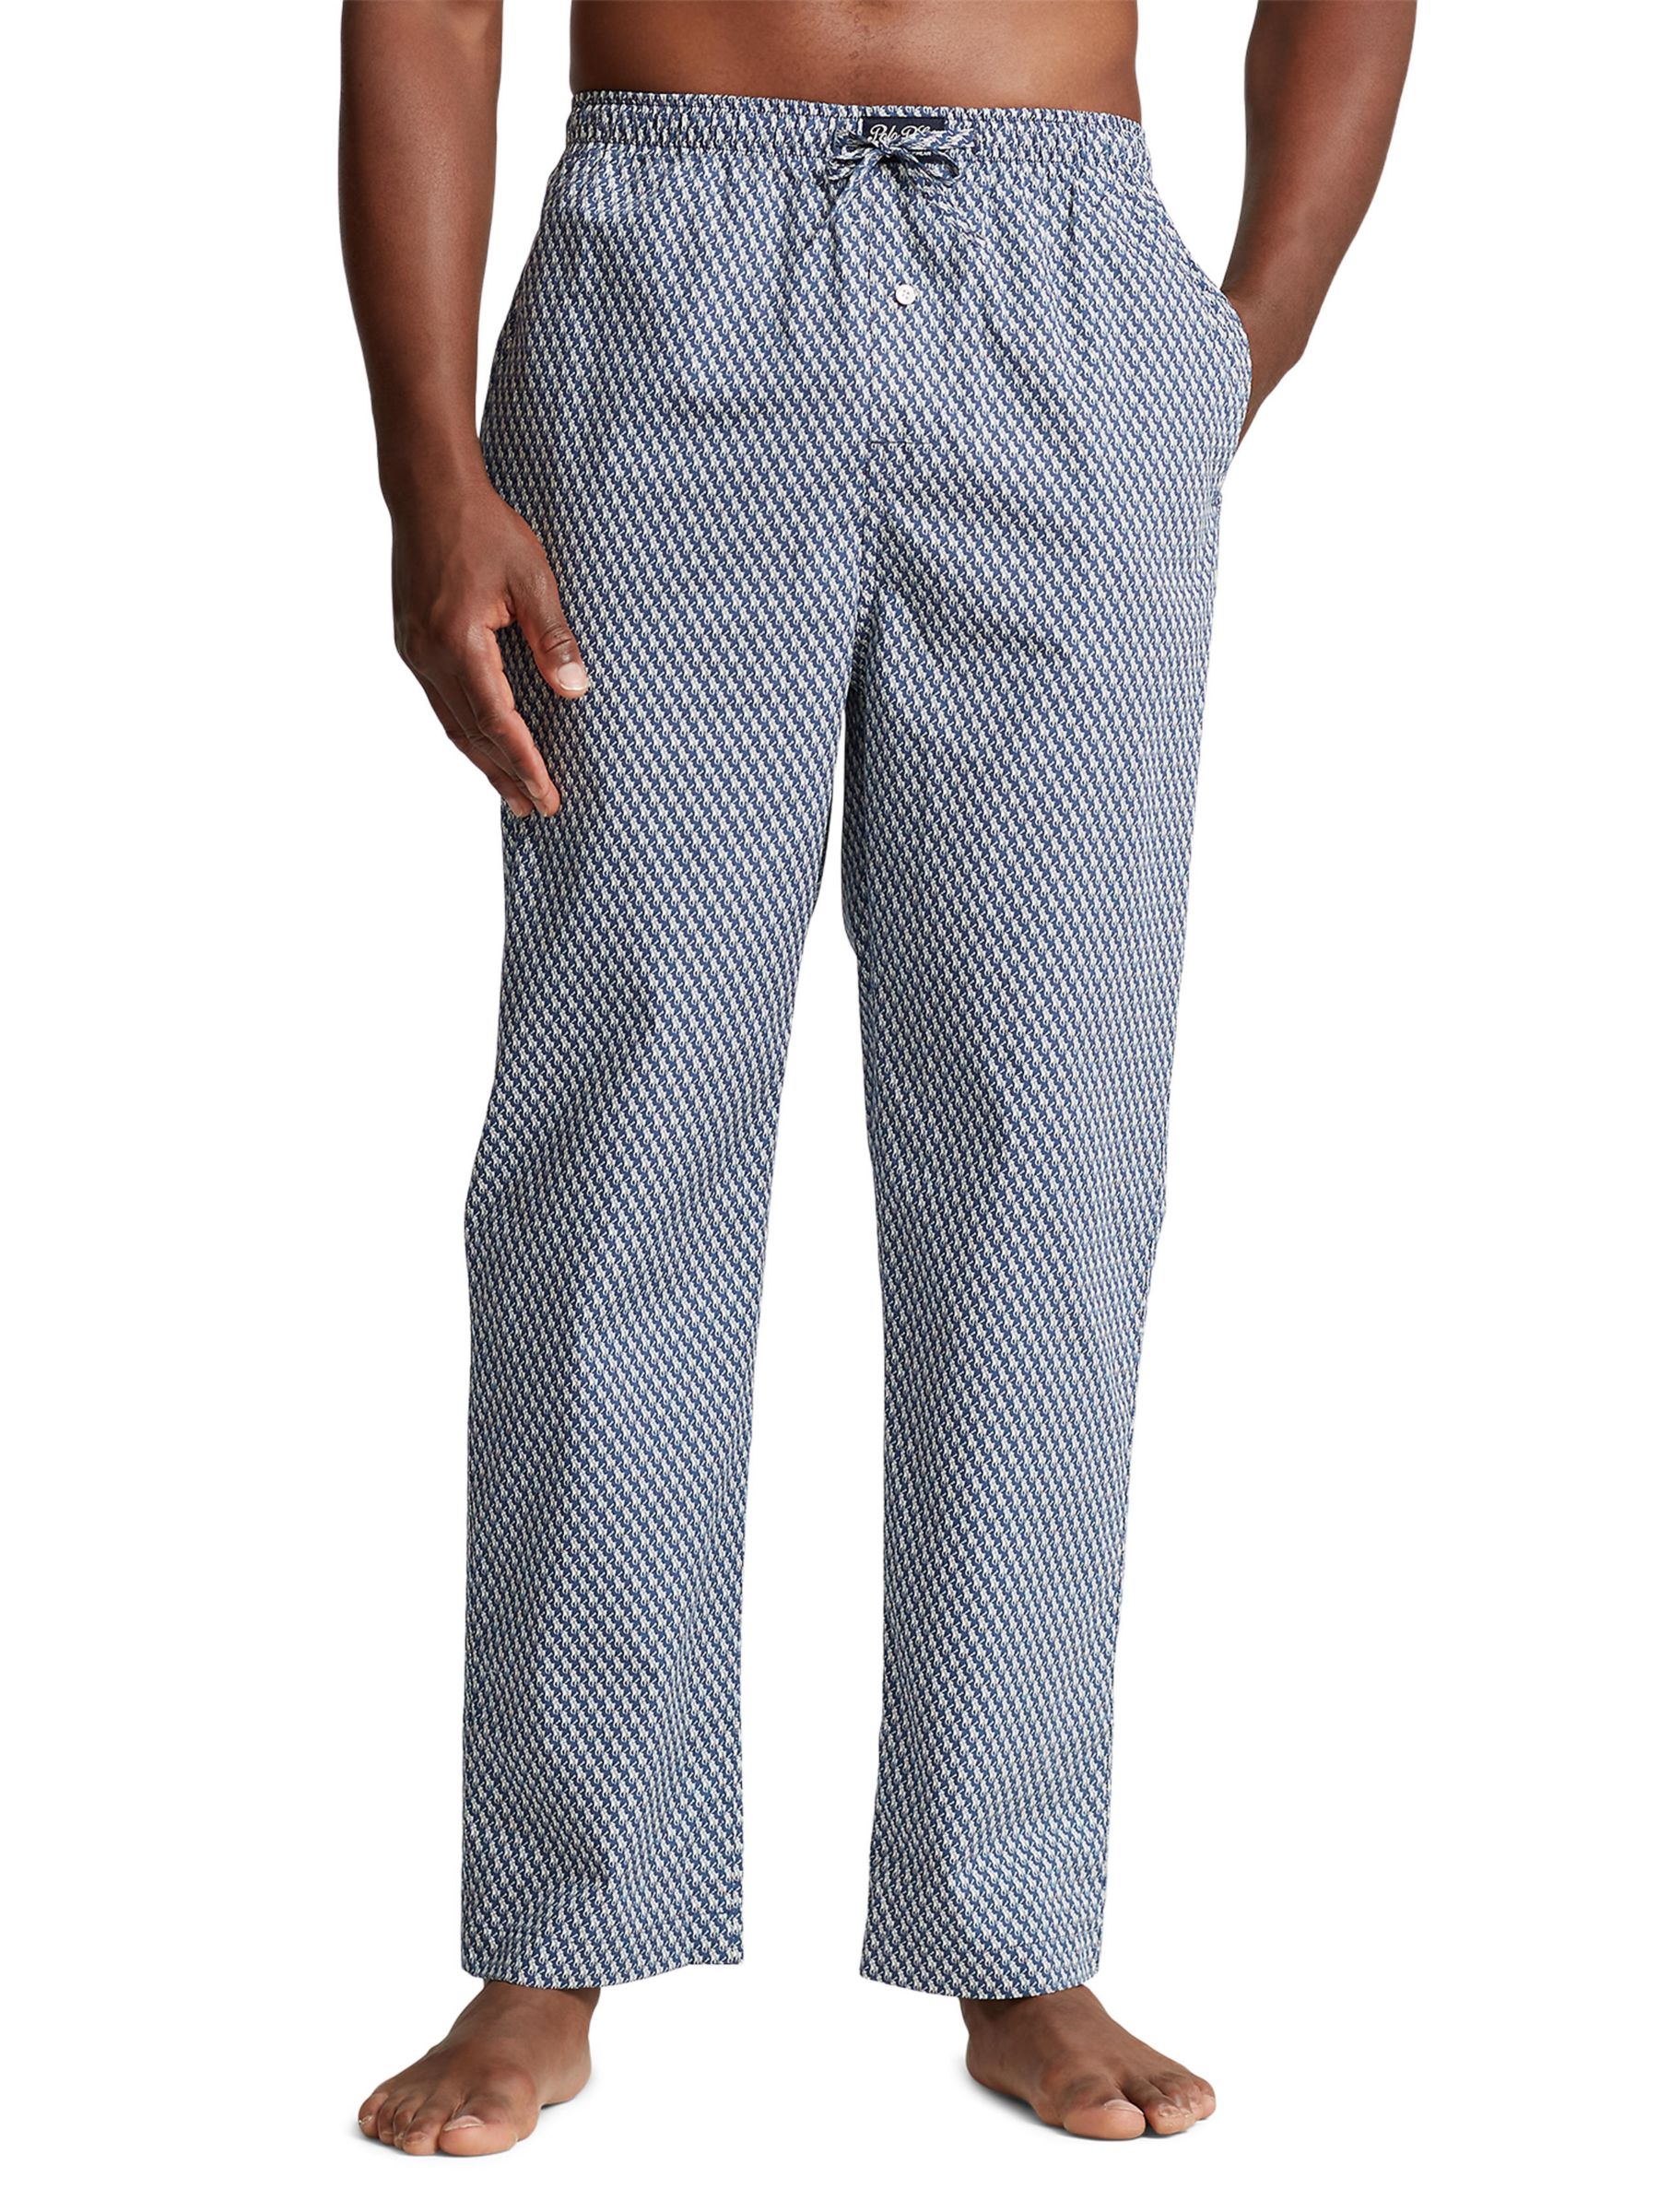 Polo Ralph Lauren Geometric Pyjamas Pants, Clancy Blue at John Lewis ...